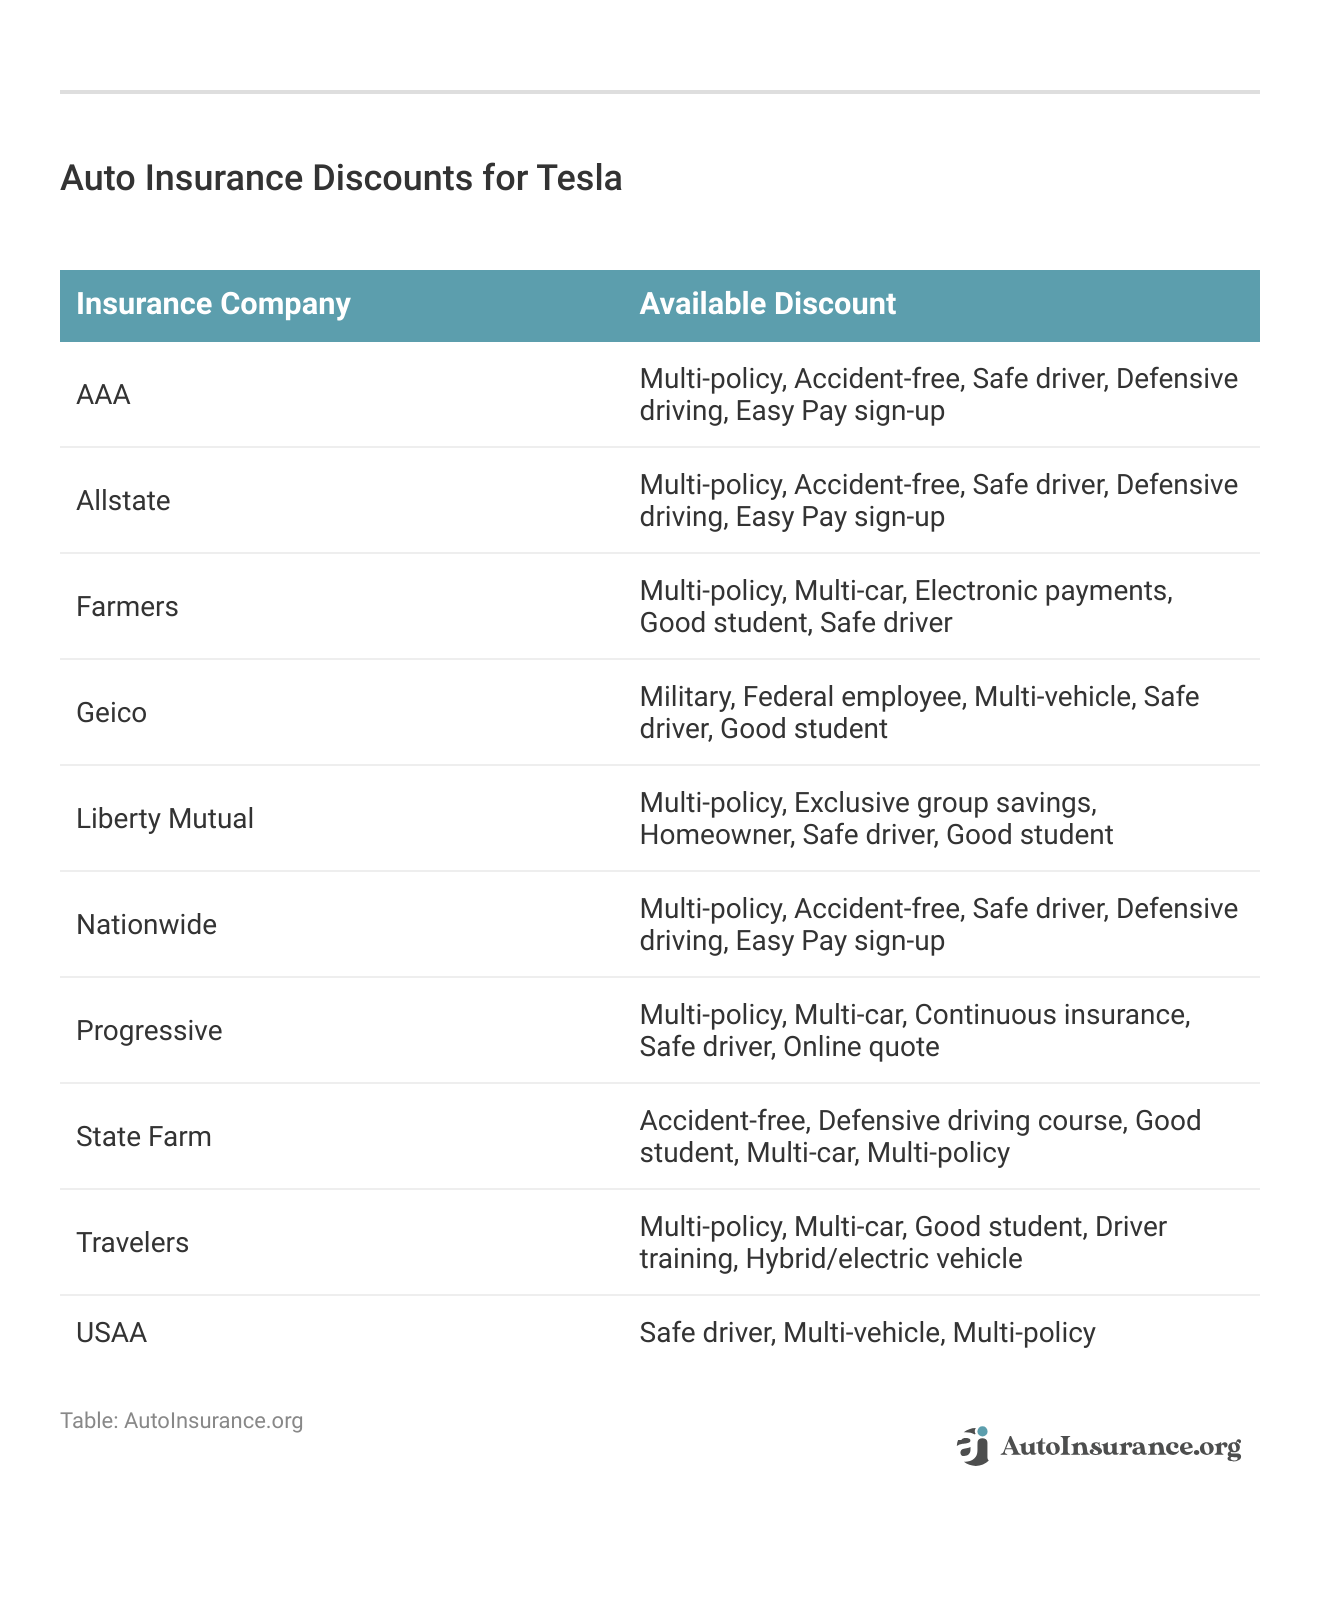 <h3>Auto Insurance Discounts for Tesla</h3>